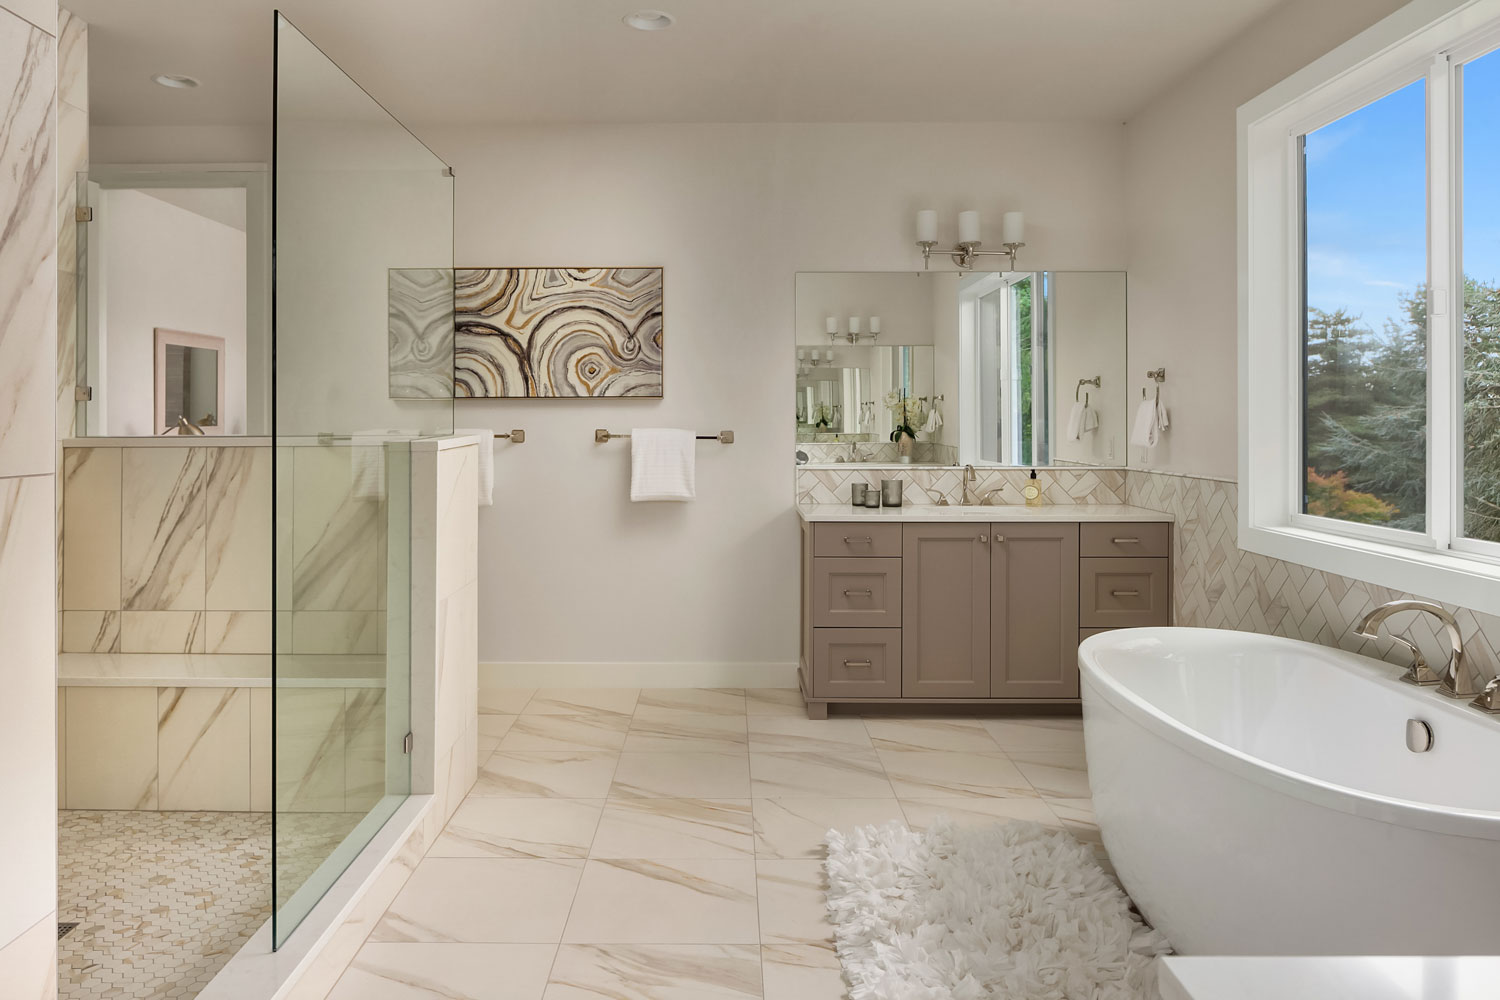 https://michelleyorkedesign.com/wp-content/uploads/2020/07/belvedere-master-bathroom-interior-design-1.jpg